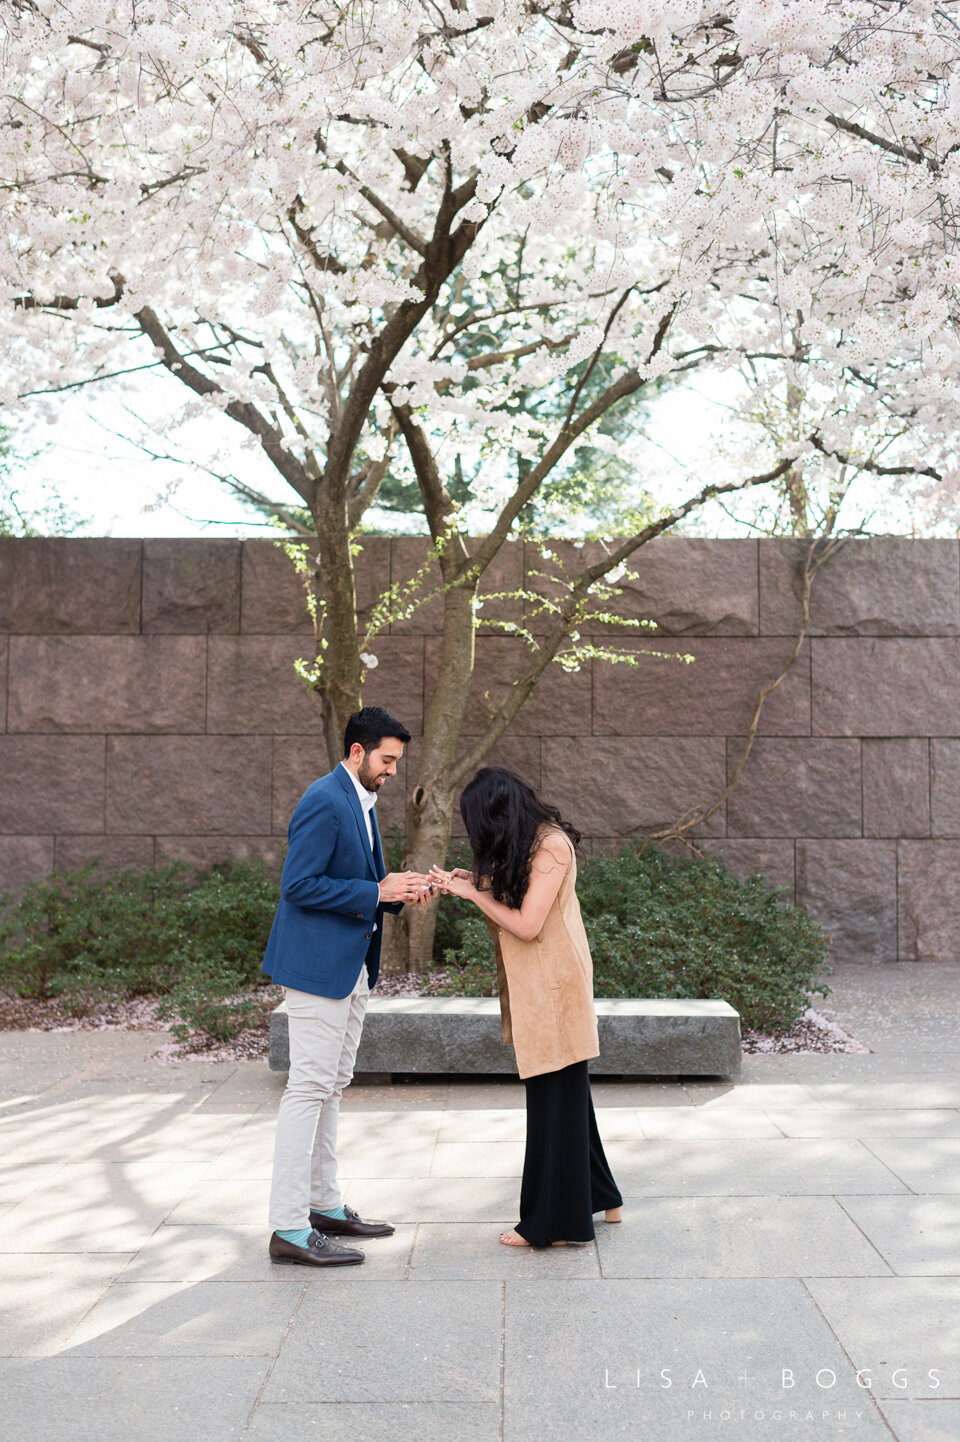 a&k-dc-cherry-blossom-proposal-engagement-photos-washington-dc-cherry-blossoms-04.jpg